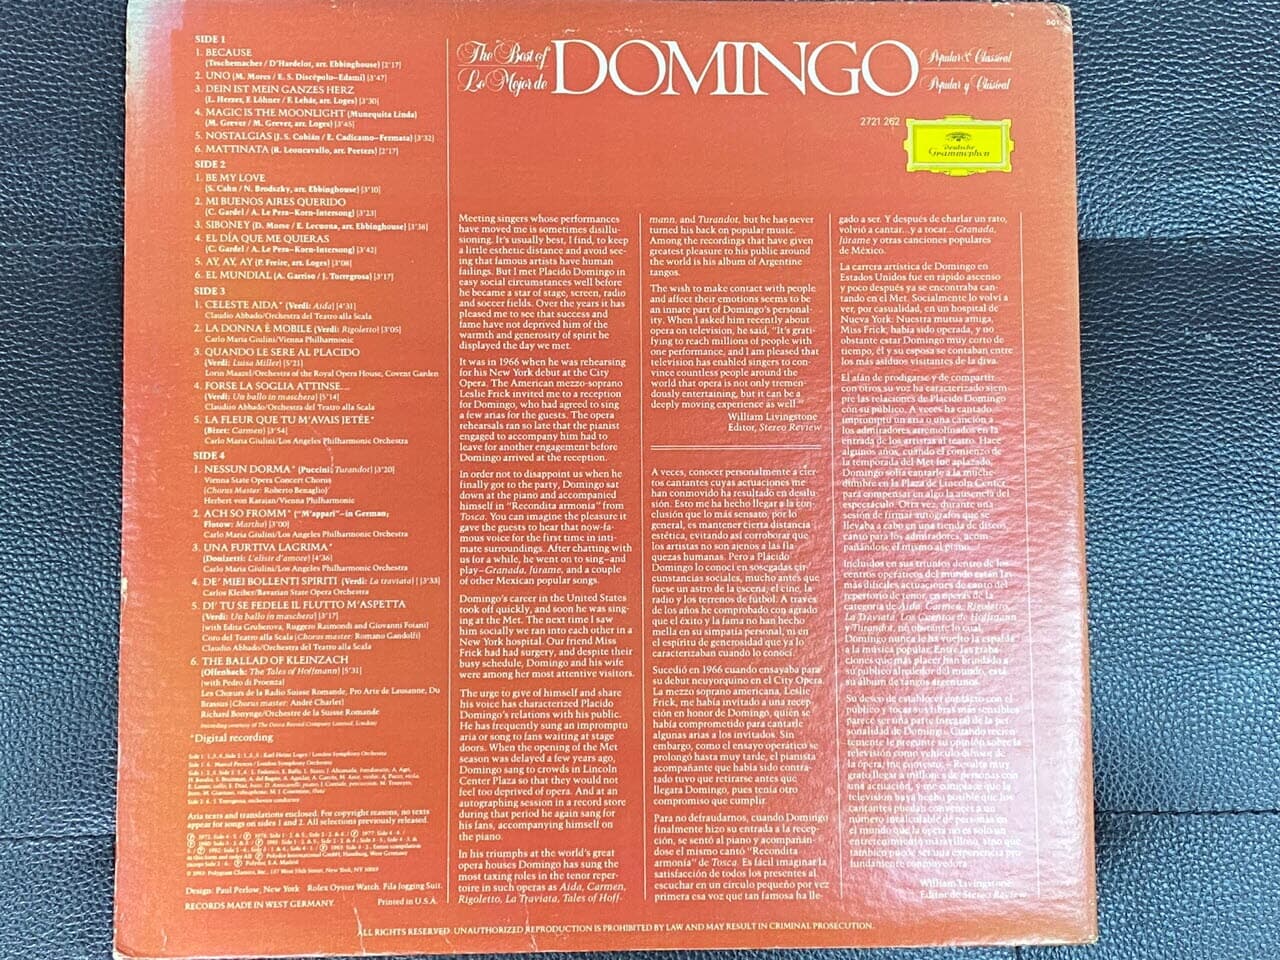 [LP] 플라시도 도밍고 - Placido Domingo - The Best Of Popular & Classical  Lo Mejor De Popular y Clasical 2Lps [독일반]